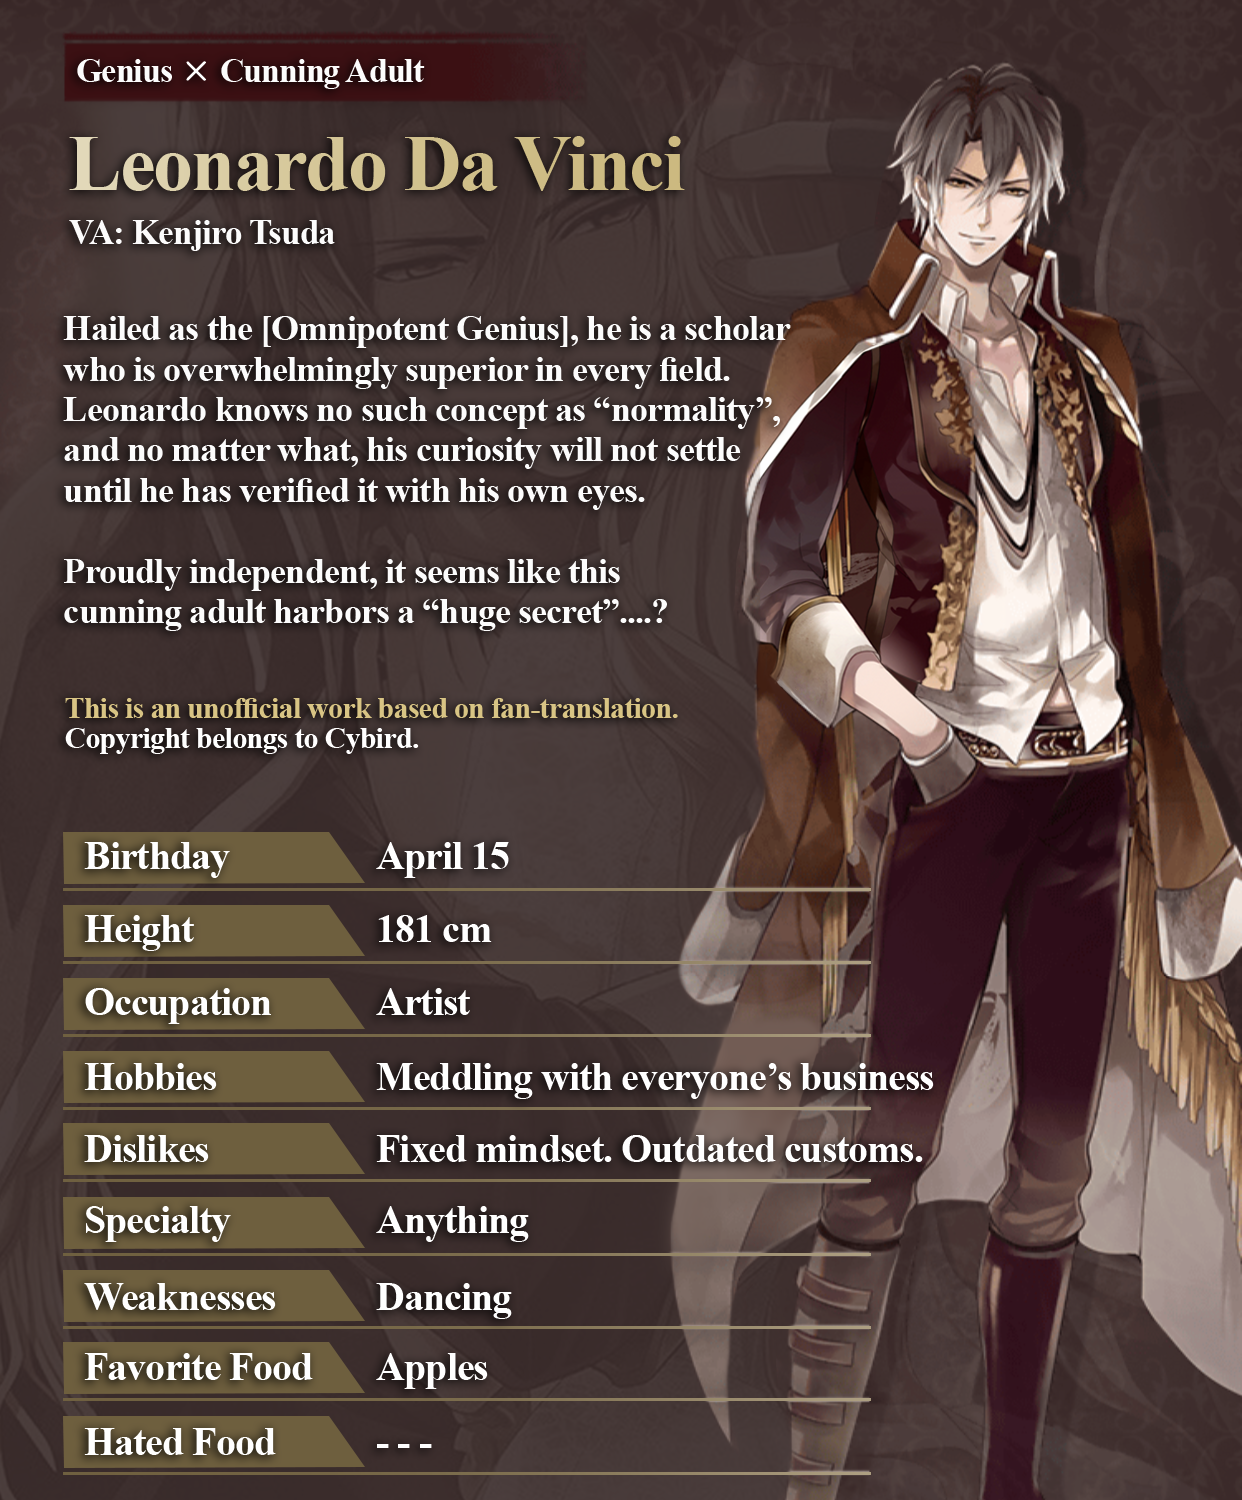 Y'all Thirsty — ikevampeventarchive: Leonardo Da Vinci Profile...